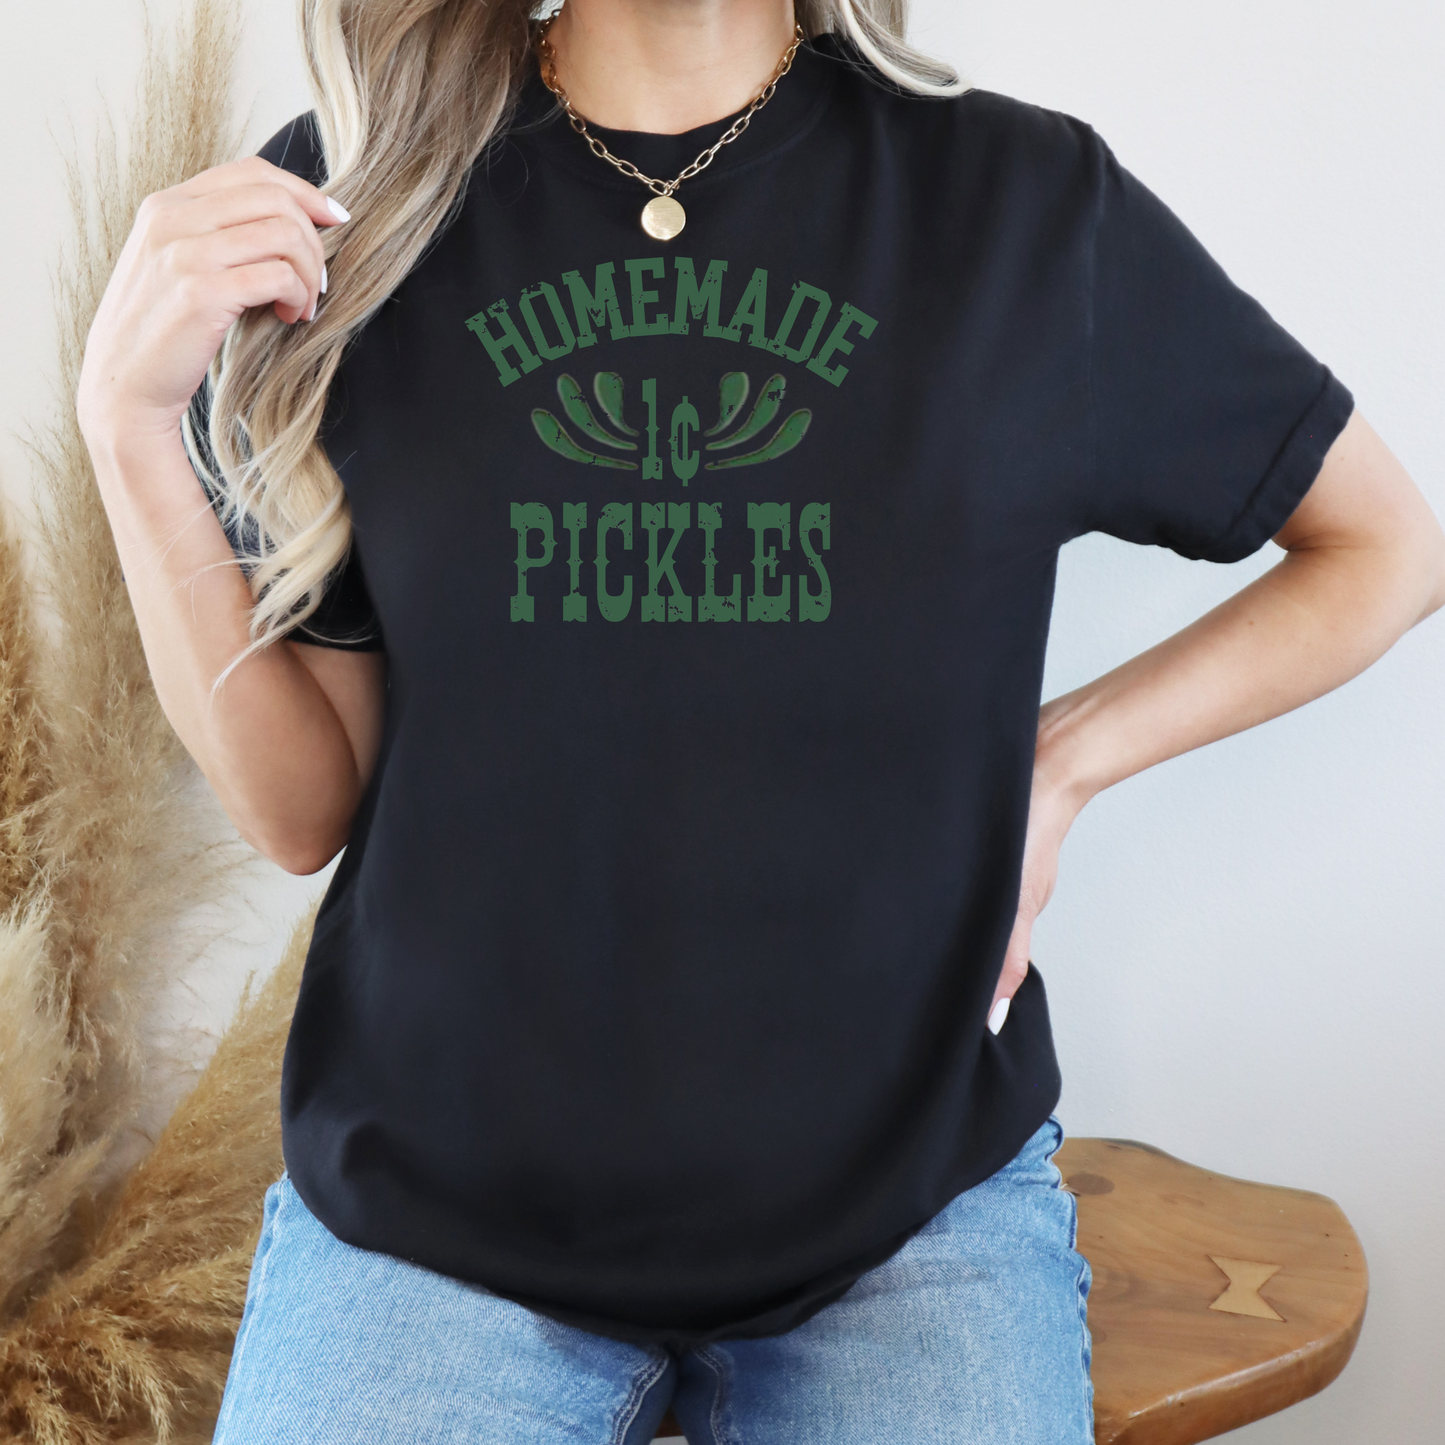 Pickles "Friends" T-Shirt